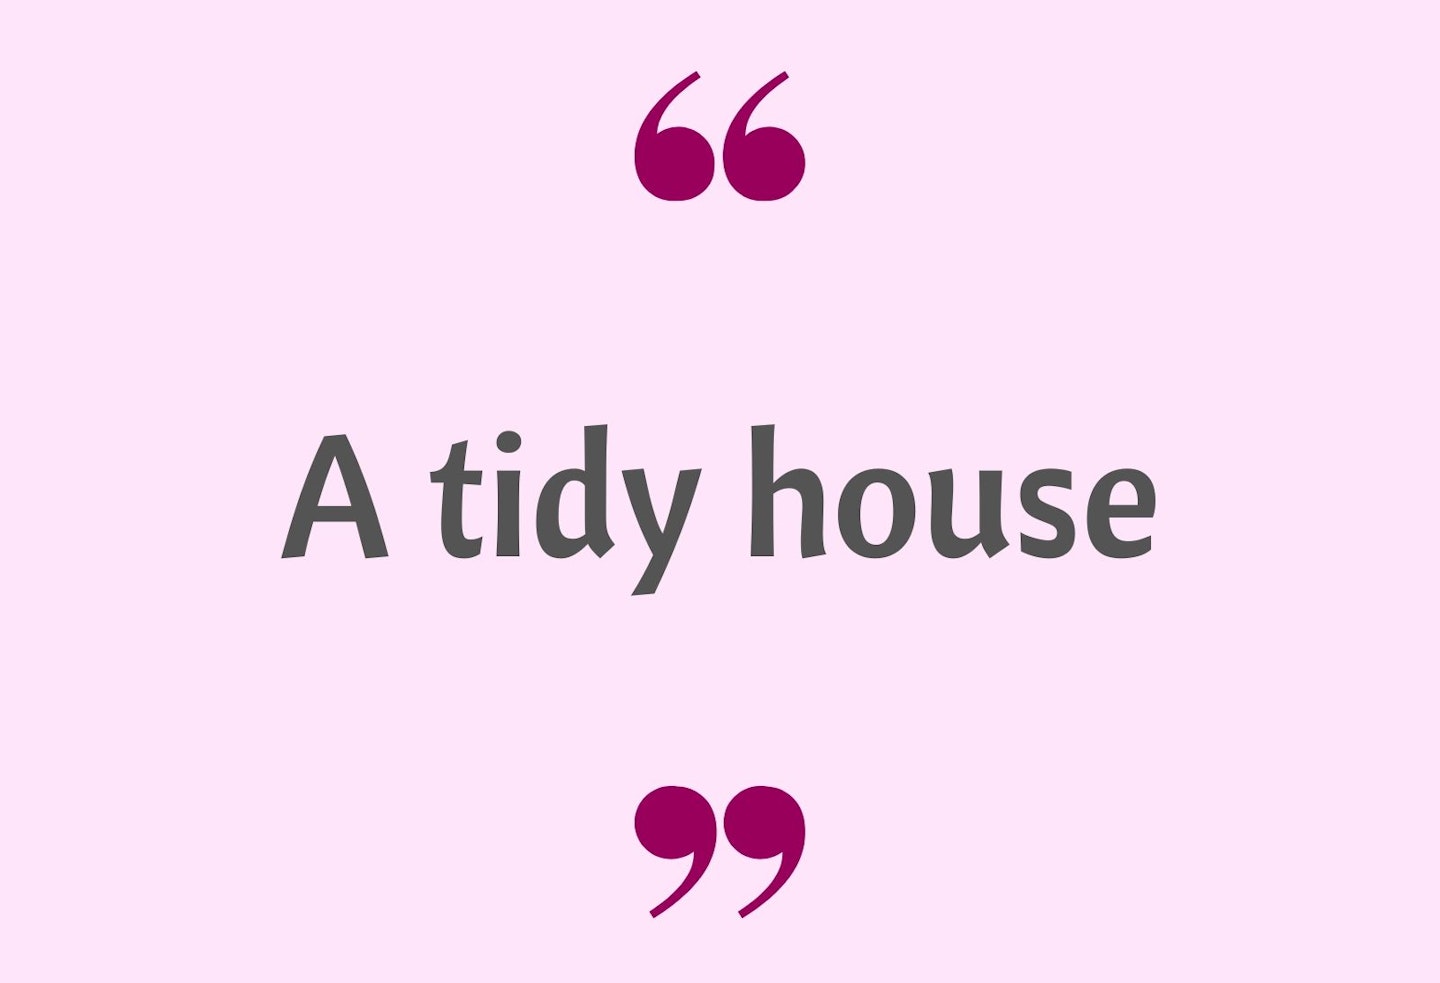 9) A tidy house